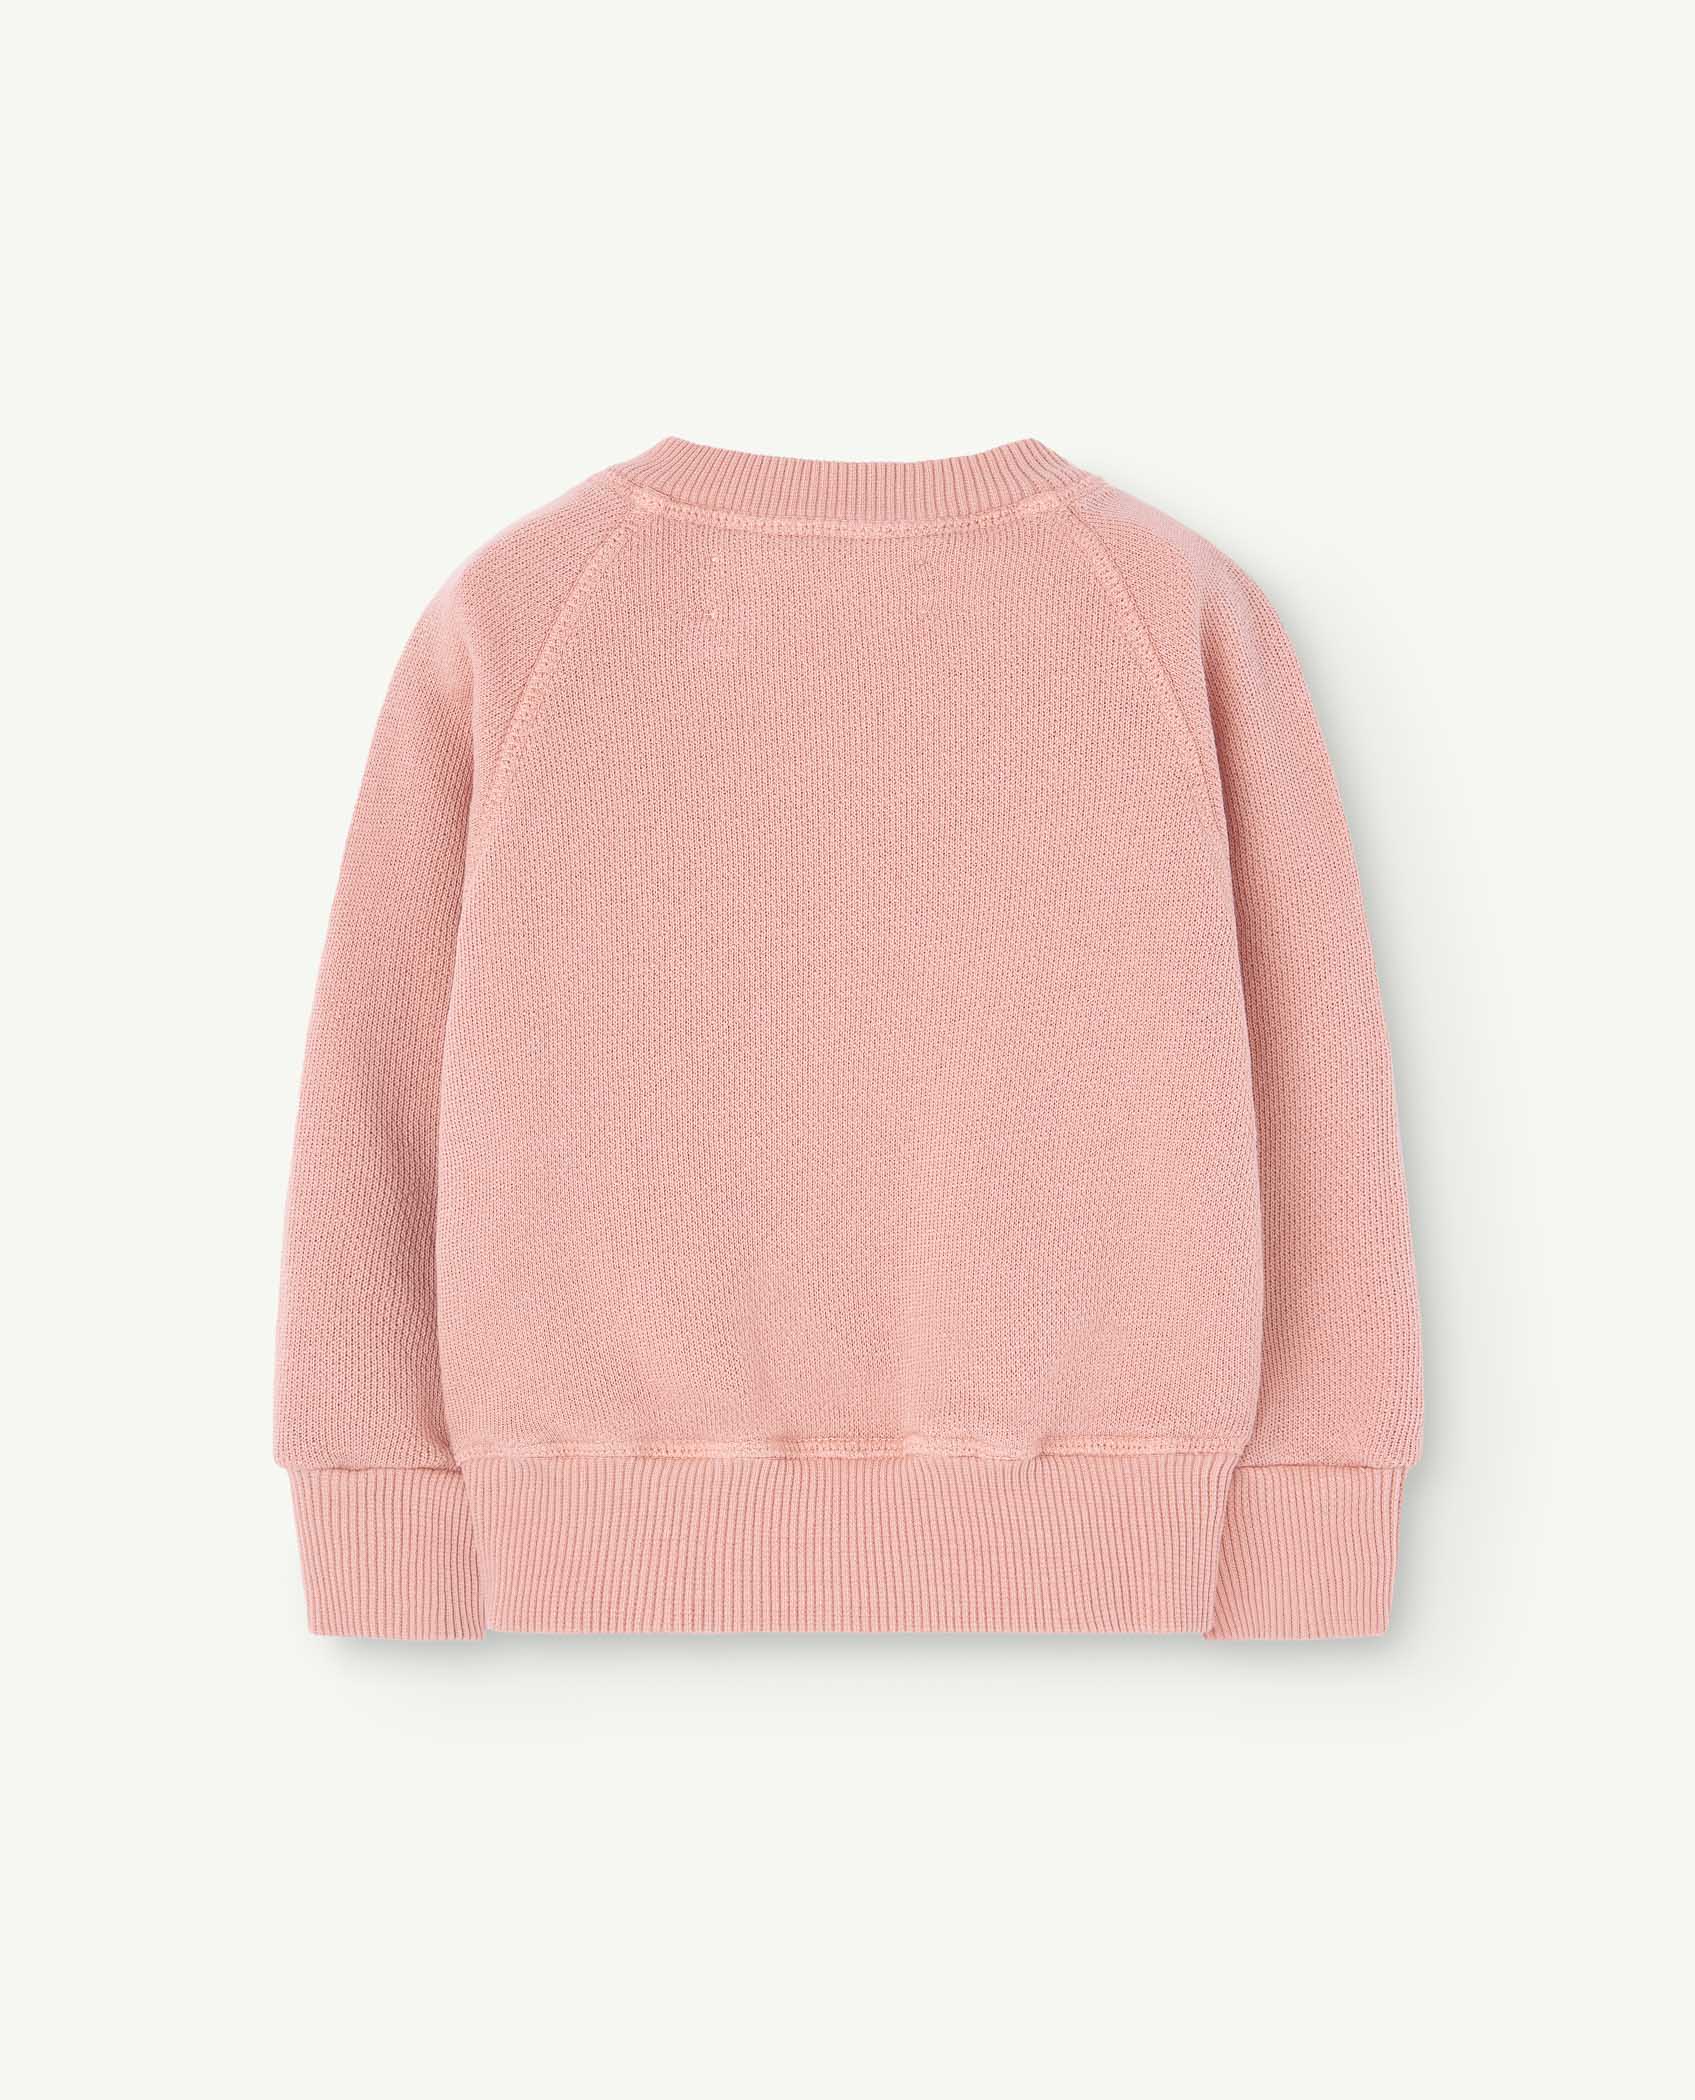 The animals Observatory - Shark baby sweatshirt - pink